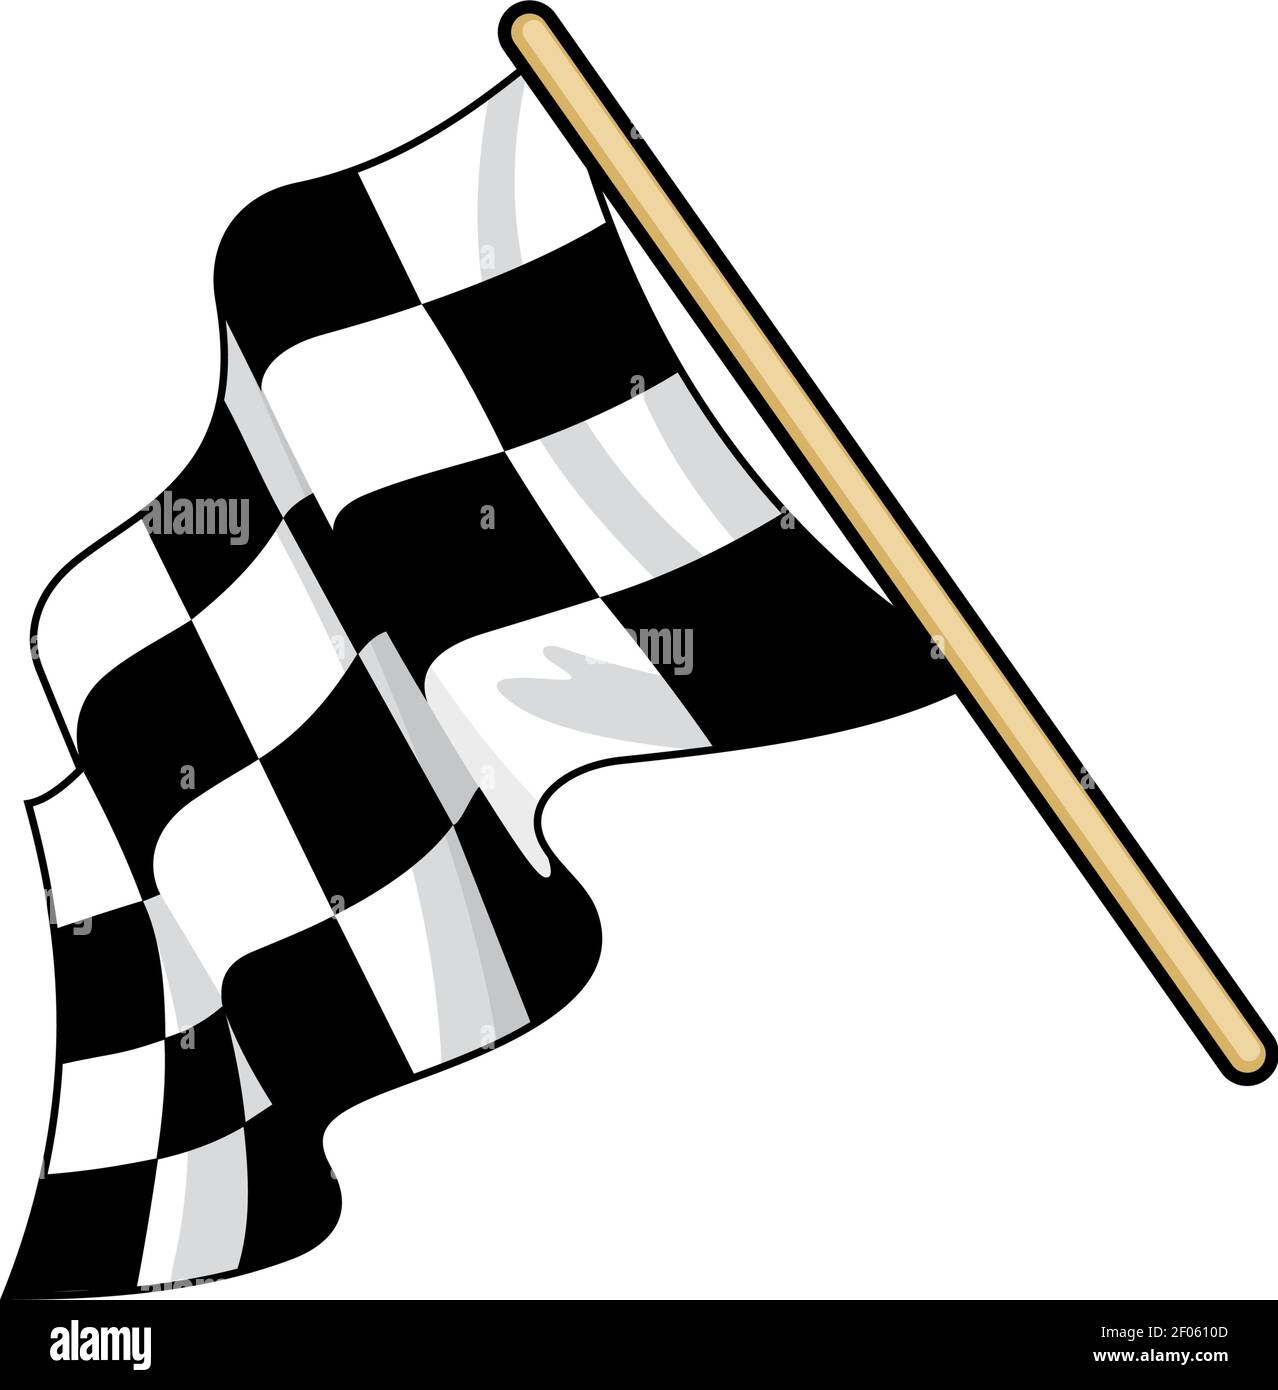 Checkered race flag flat vector illustration. Speed racing competition flag cartoon sticker. Motocross, carting championship symbol. Start, finish sig Stock Vector